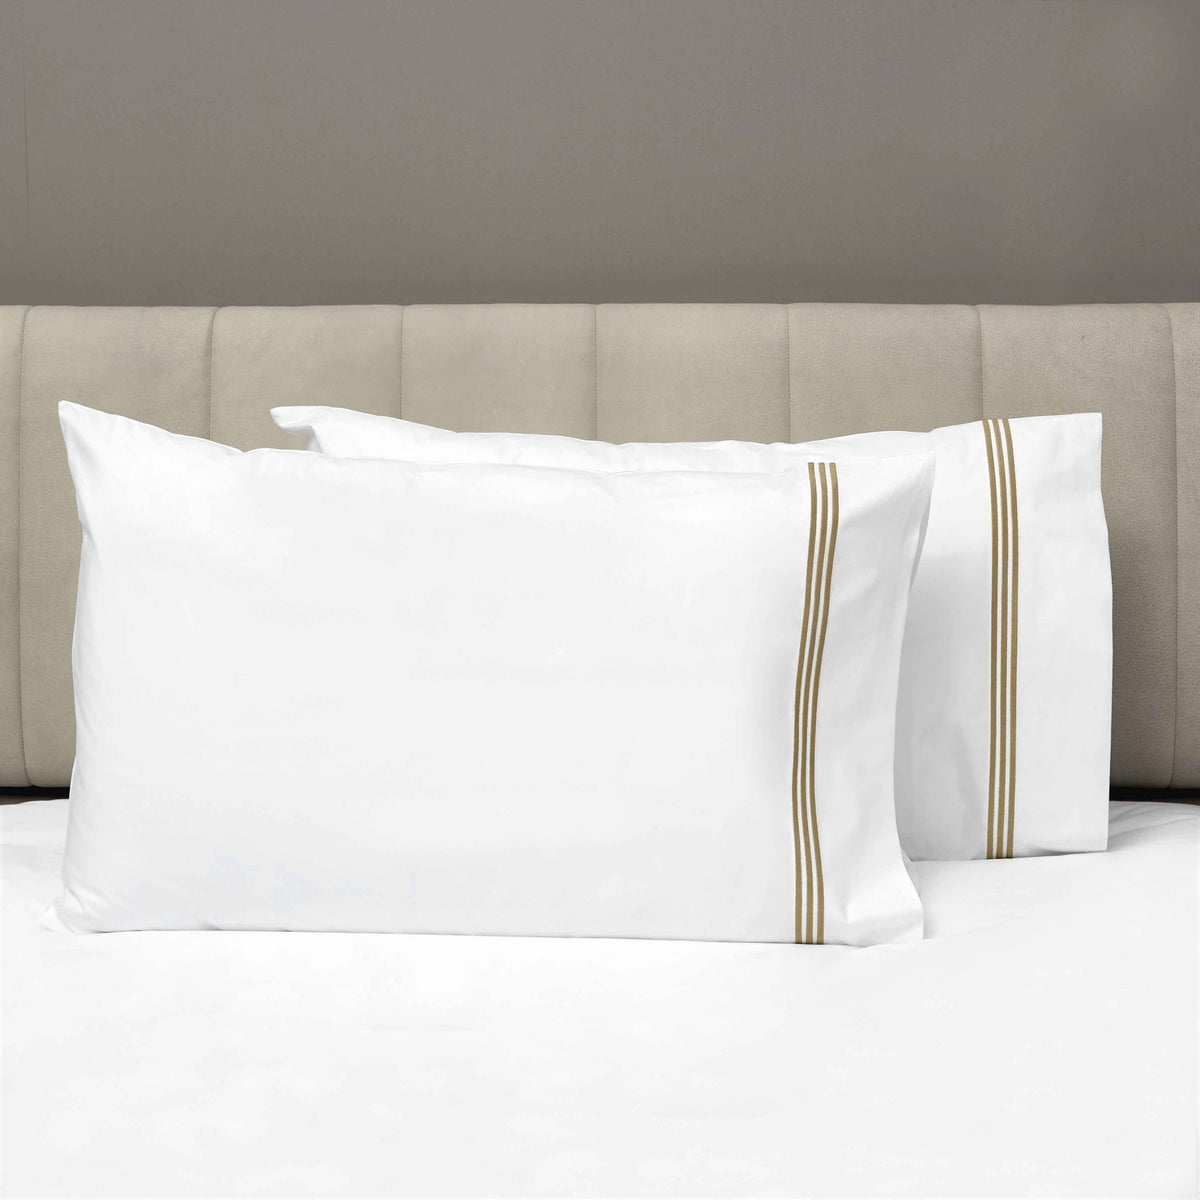 Pair of Pillowcases of Signoria Platinum Percale Bedding in White/Coffee Color